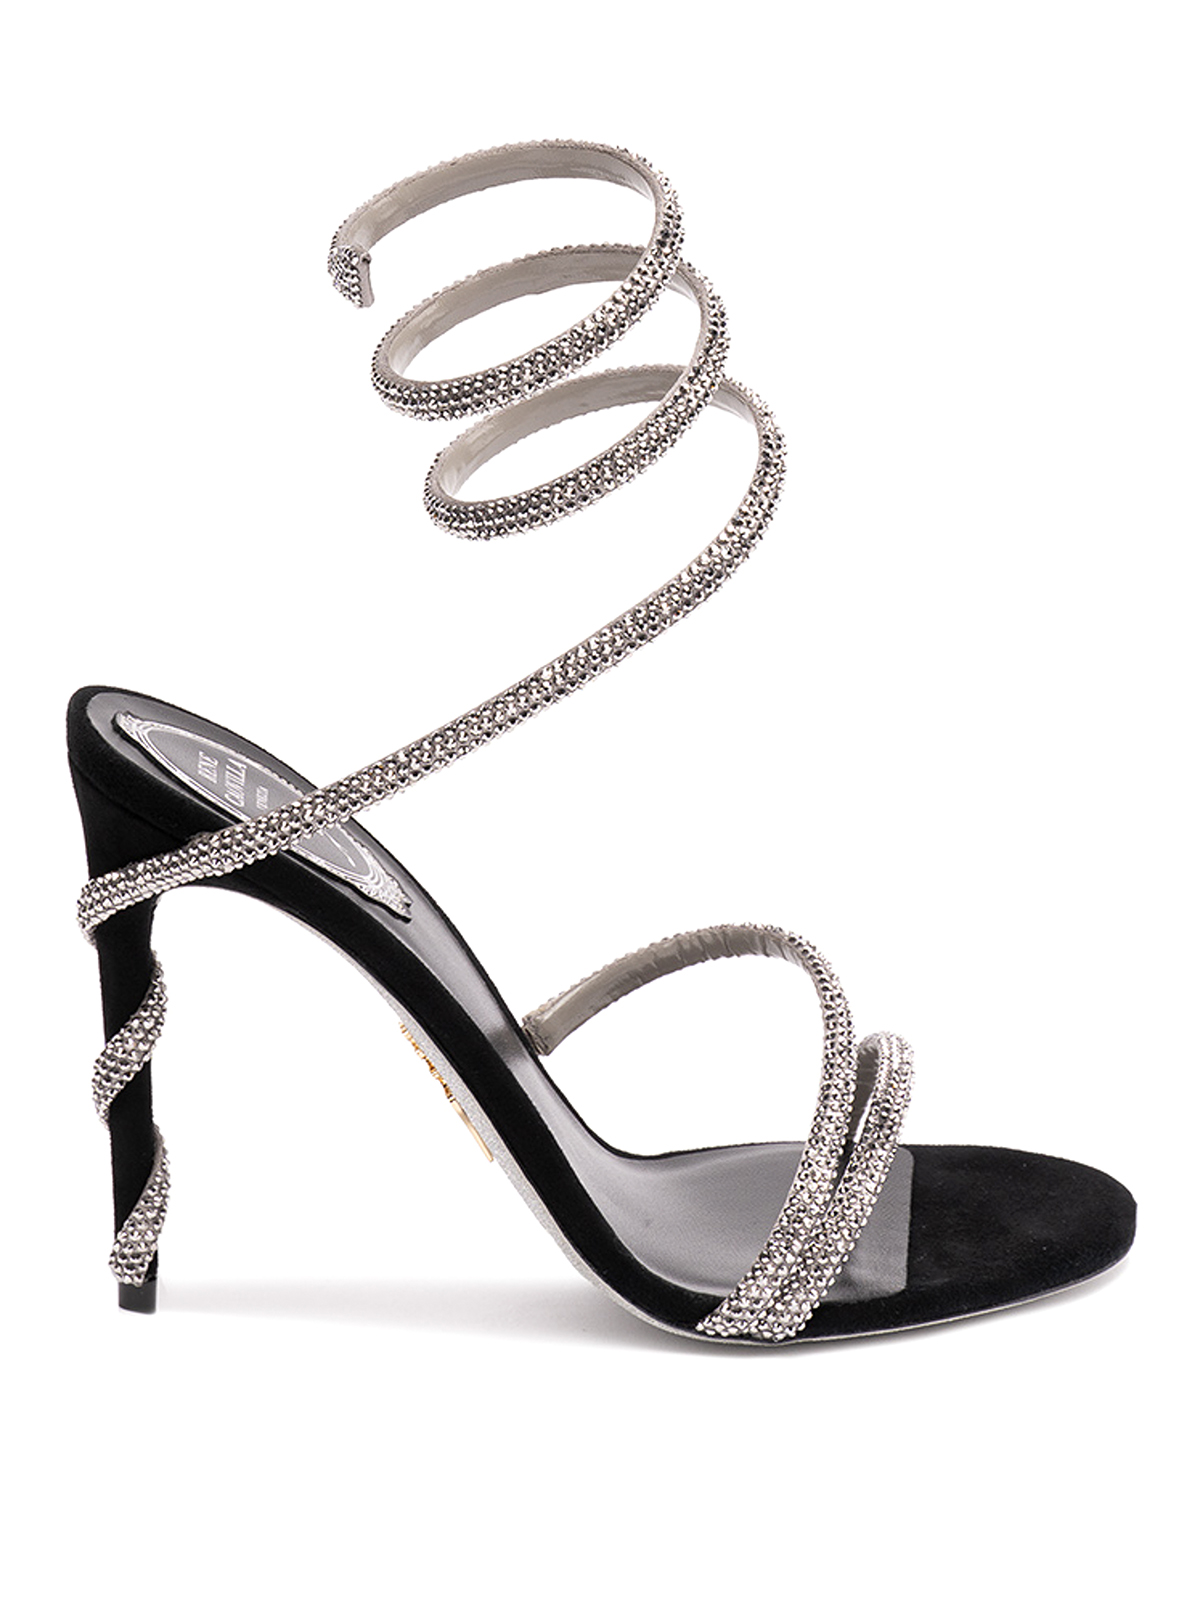 Sandals Rene Caovilla - Margot snake sandals - C11339105C001V547